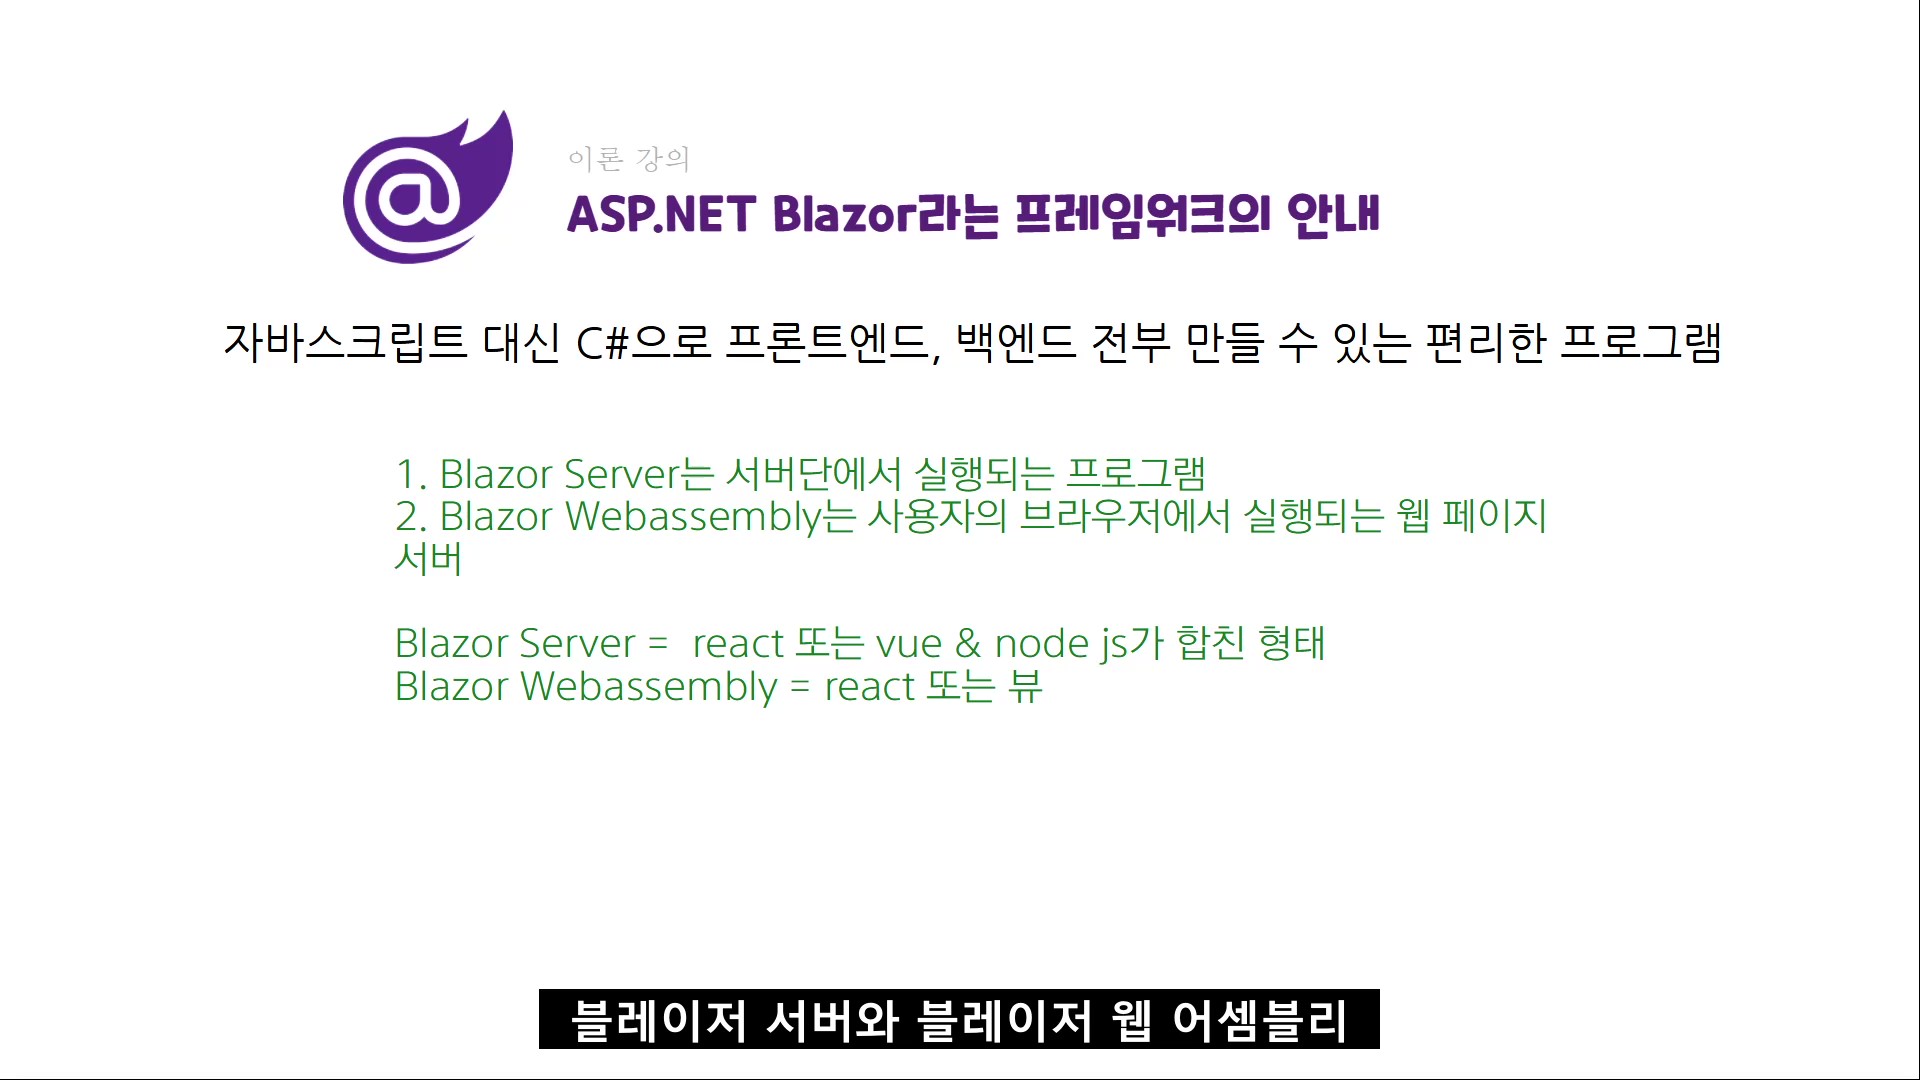 ASP.NET Blazor 만의 구조 특징을 설명